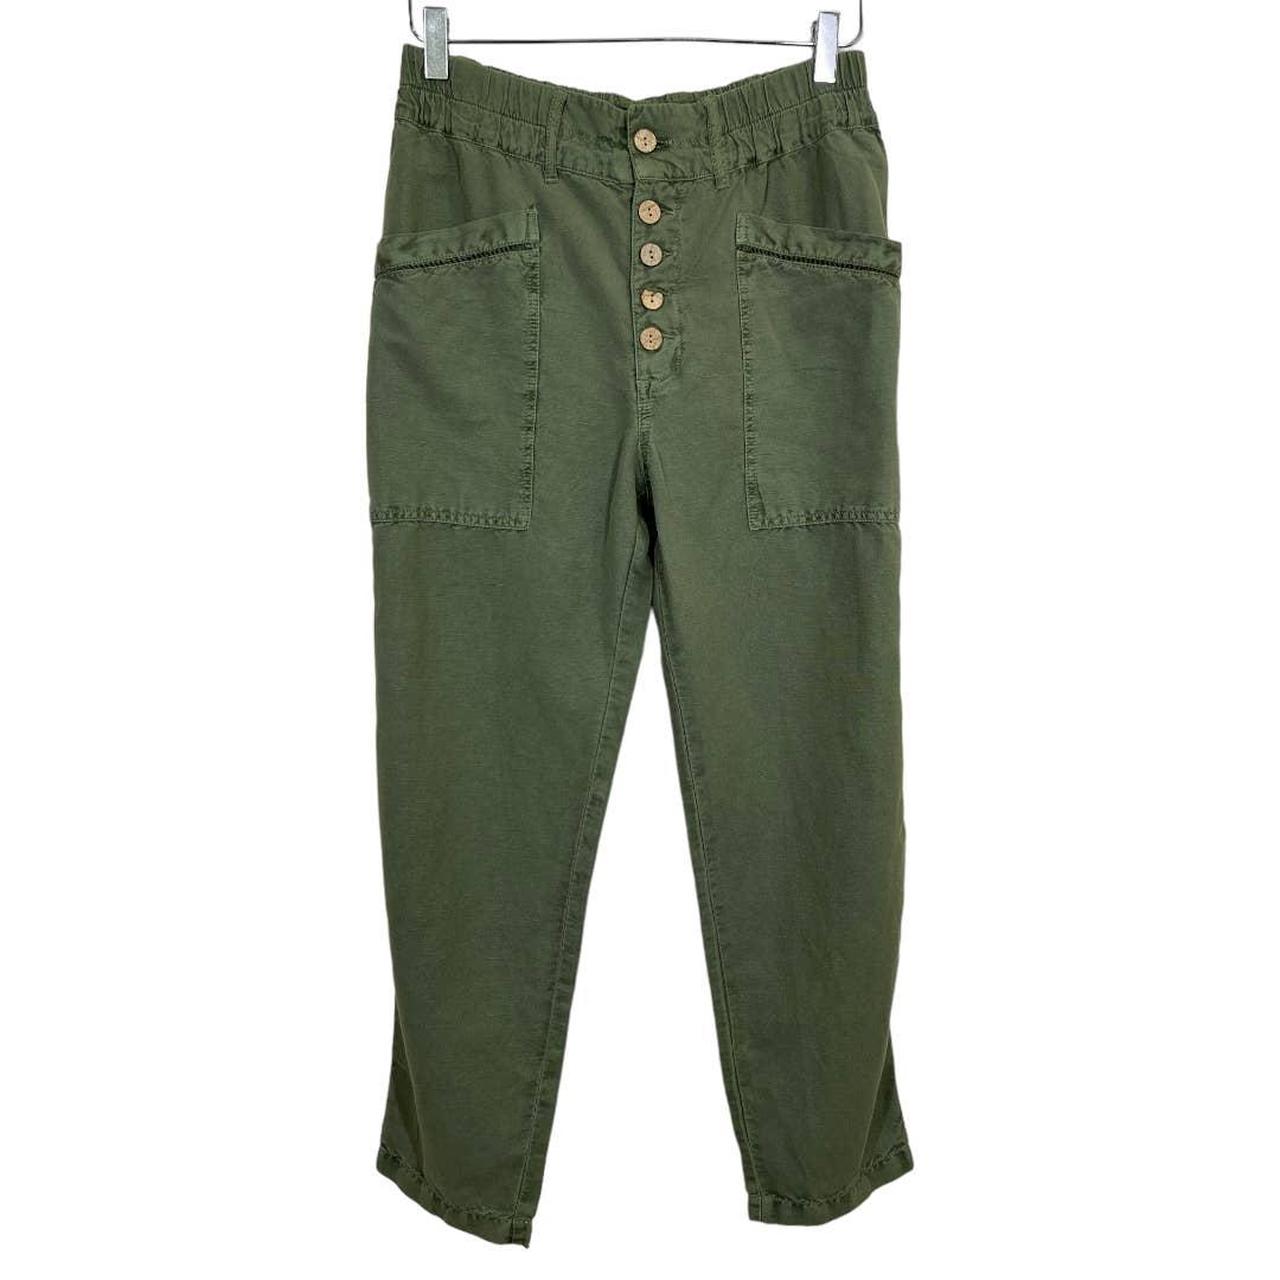 Unique to custom pants is the button fly trouser. | Mens trousers, Mens  slacks, Mens pants fashion